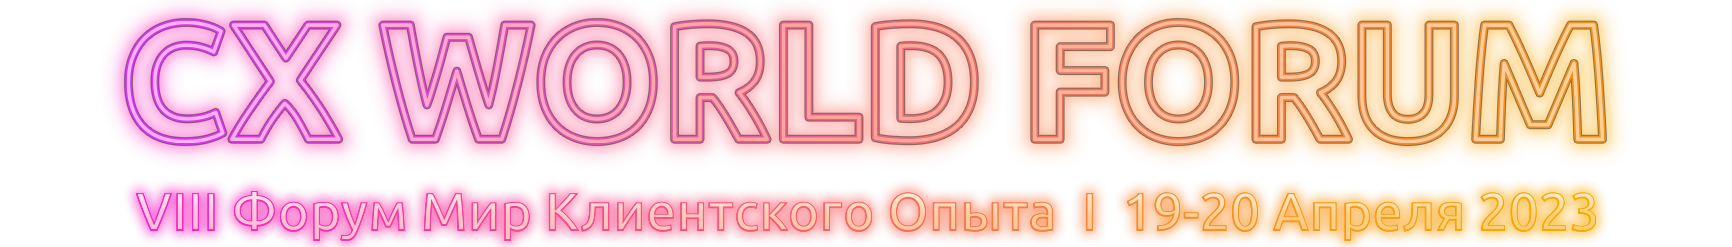 CX WORLD AWARDS VIII Форум Мир Клиентского Опыта | 19-20 Апреля 2023, Москва